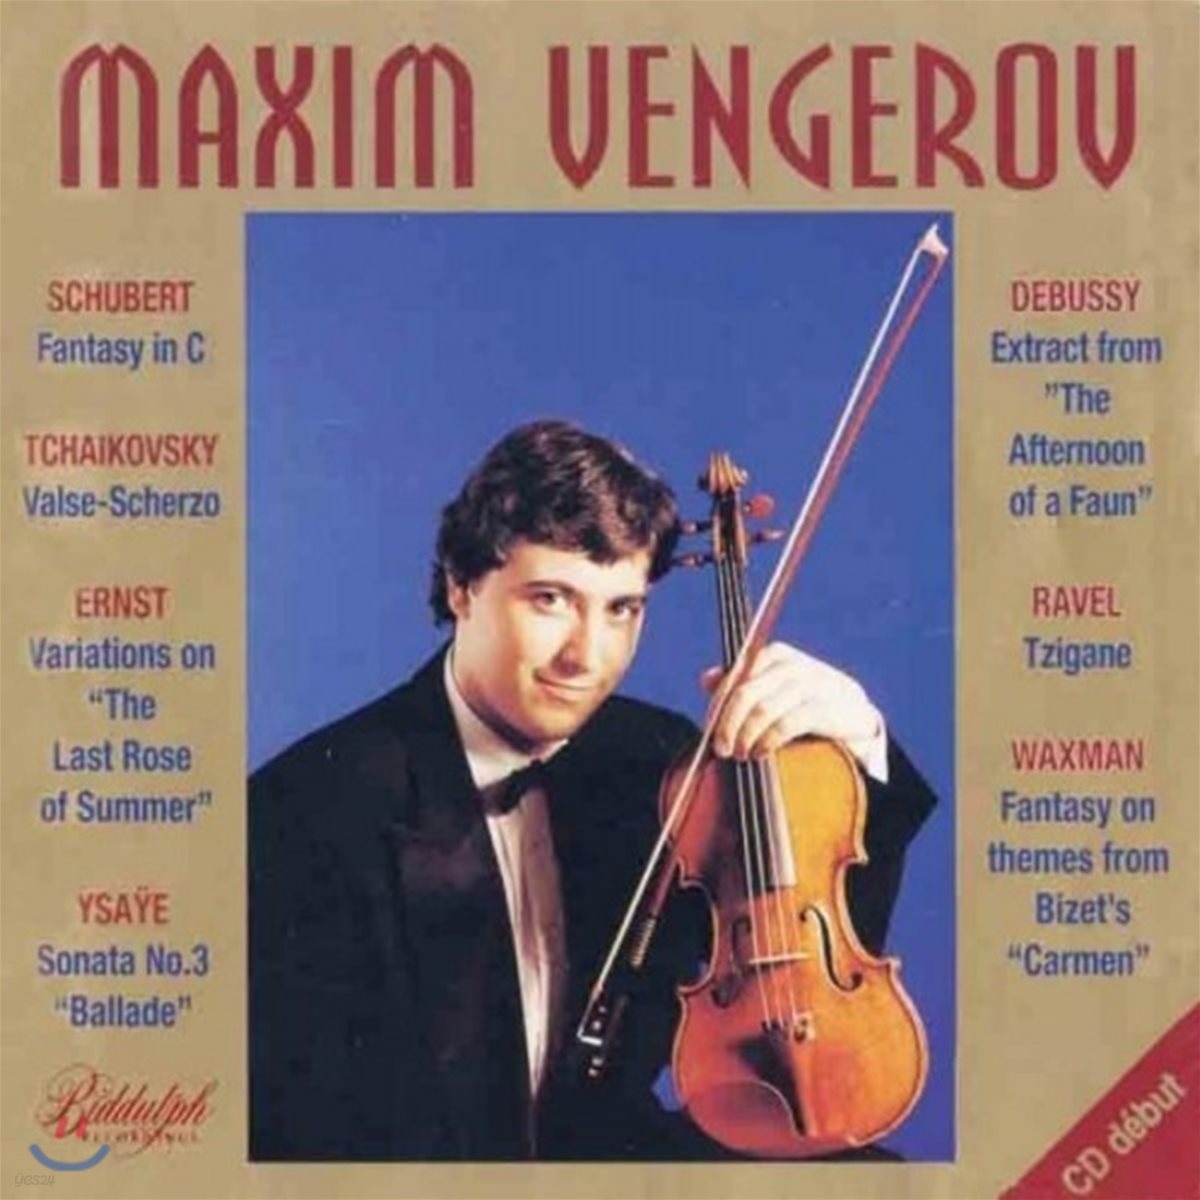 Maxim Vengerov 막심 벤게로프 데뷔 앨범 - 슈베르트 / 차이코프스키 / 드뷔시 / 라벨 외 (Debut Album - Schubert / Debussy / Tchaikovsky / Ravel / Ysaye)